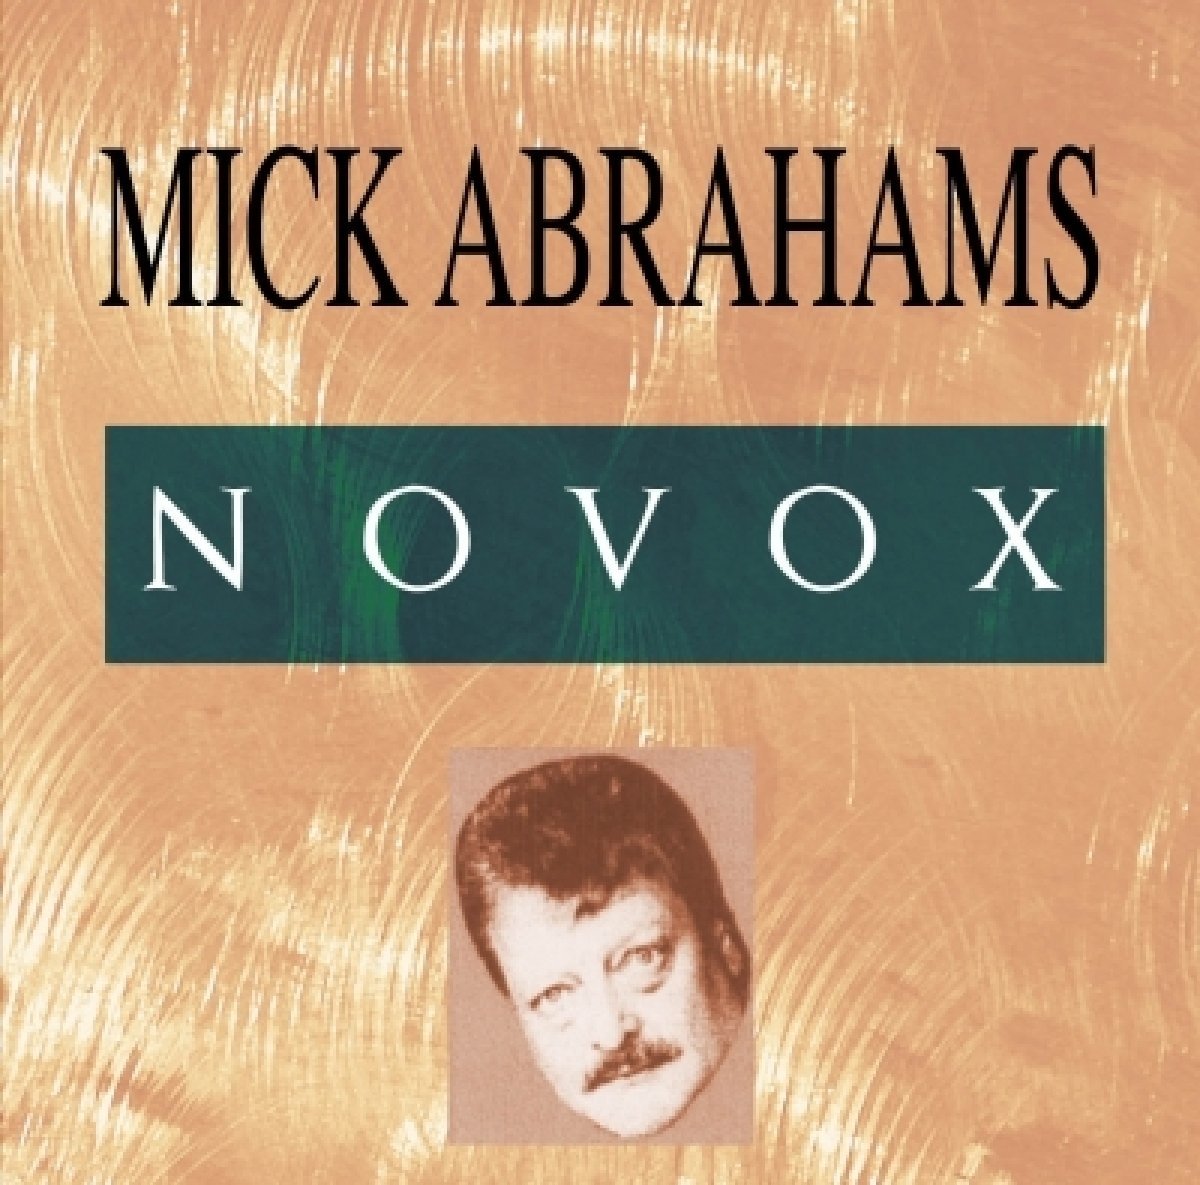 Mick Abrahams — Novox